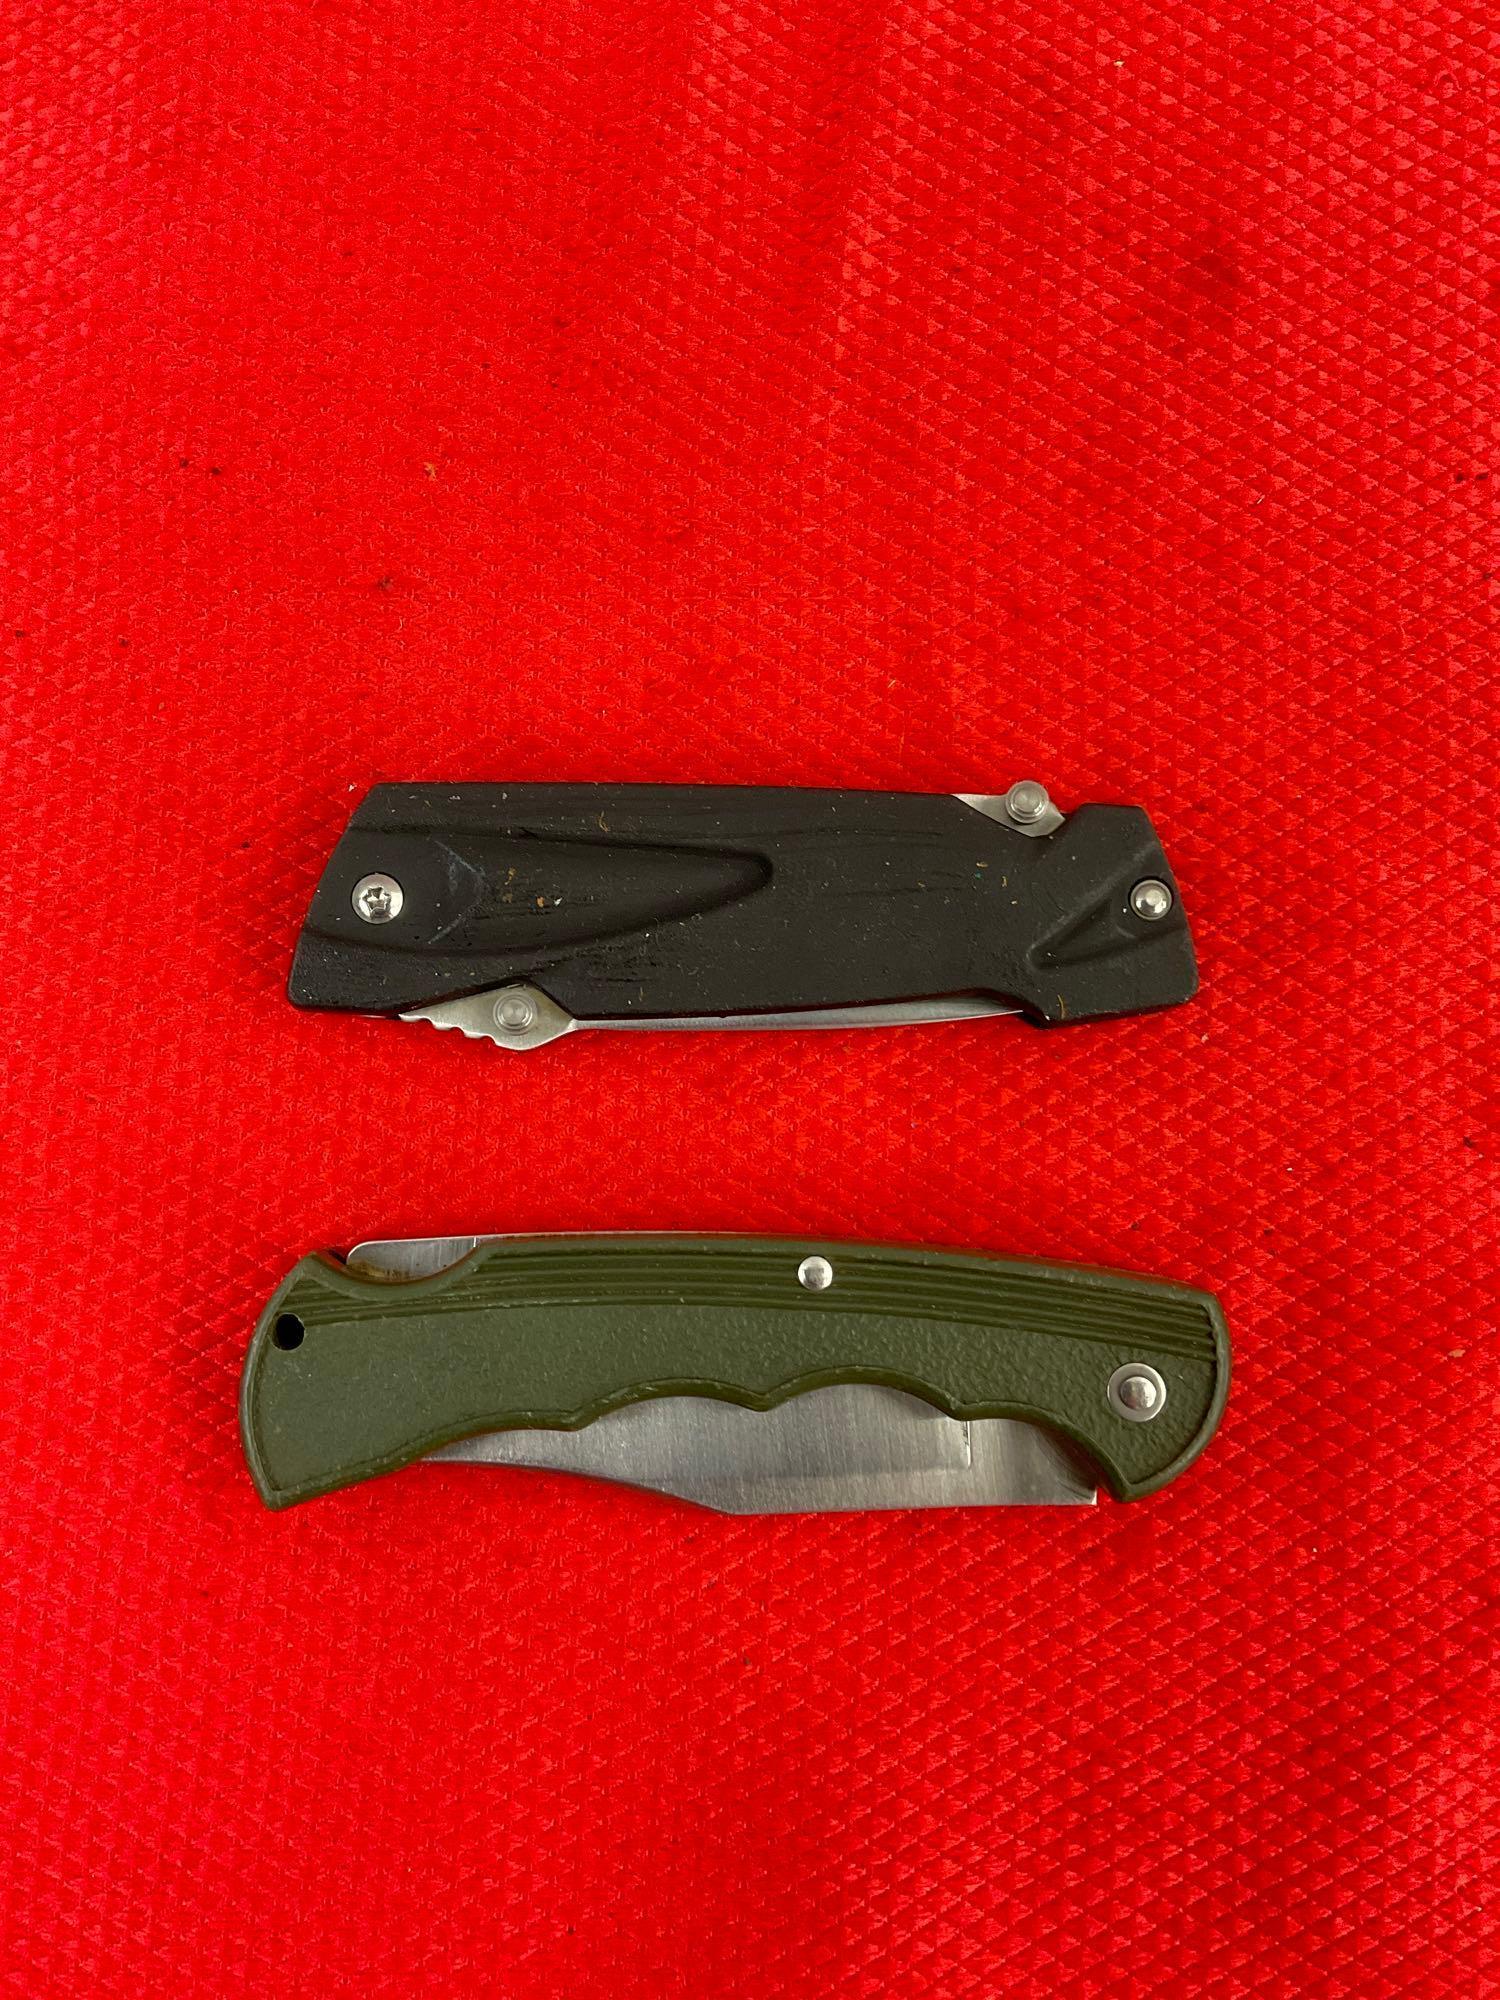 2 pcs Buck Steel Folding Knives w/ Sheathes, Models 422V Bucklite & 731<- w/ Can Opener. See pics.